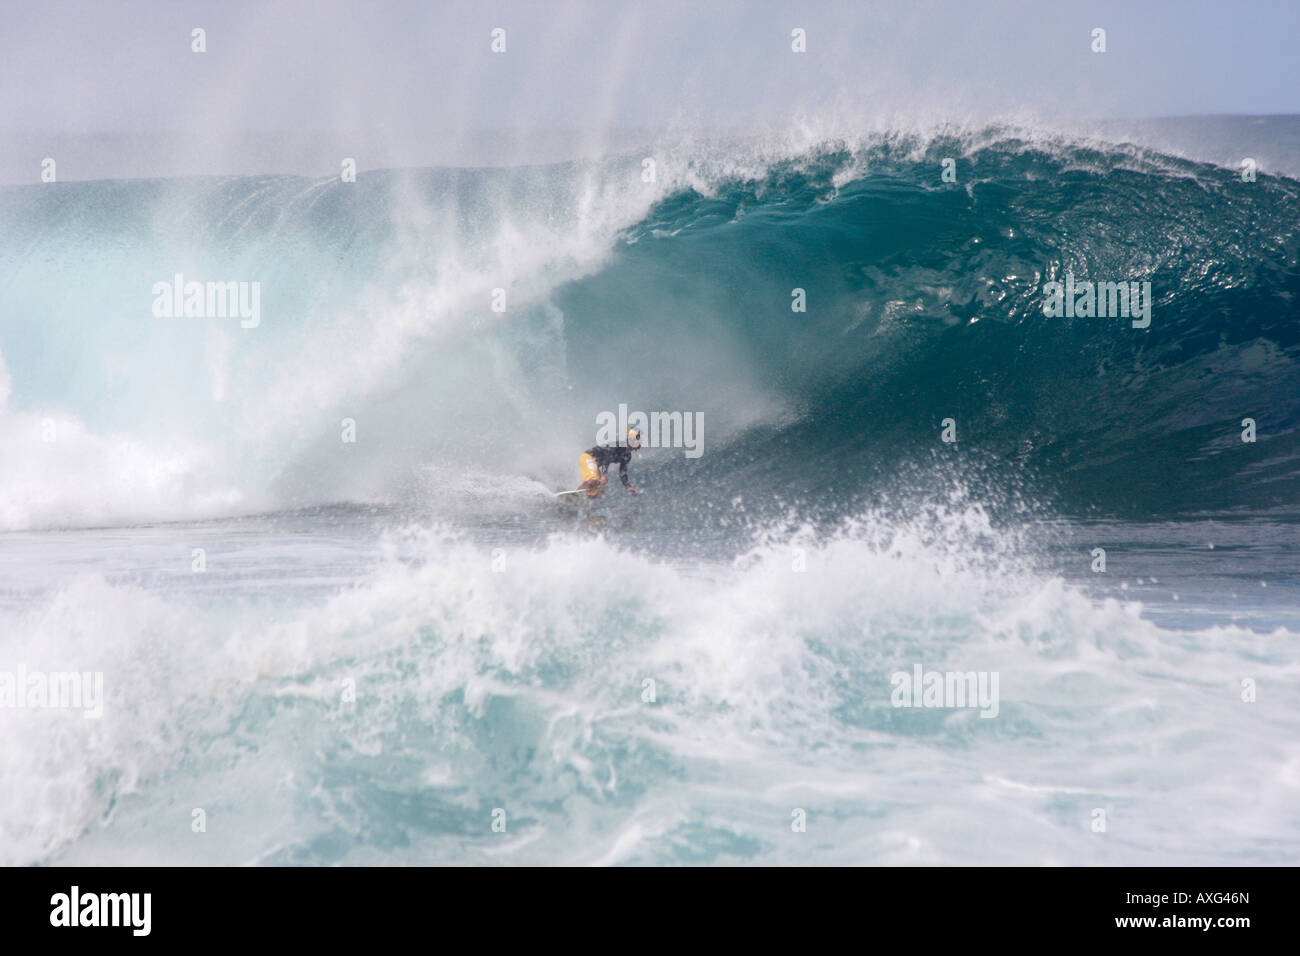 RIESIGE WELLEN IN DER "PIPELINE", WAIMEA BEACH, NORTH COAST, OAHU, HAWAII FÖRDERN ABENTEUERLICHE SURFEN Stockfoto